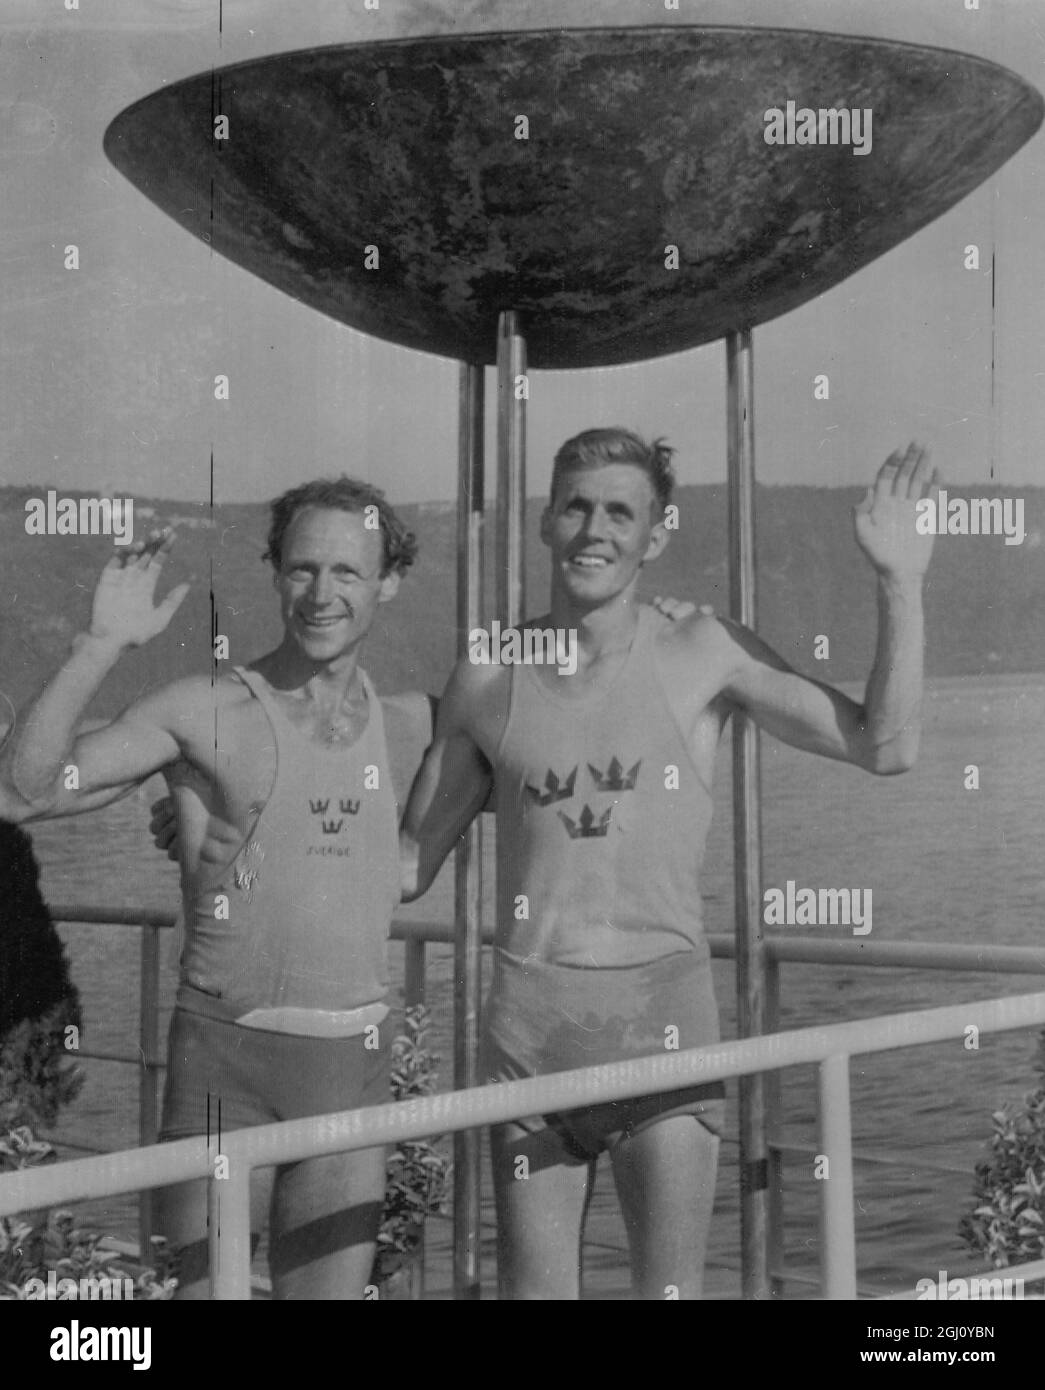 OLYMPIASPIEL KAYAK 1000M K2 FREDERICKSSON & SJODELIUS GEWINNEN AM 30. AUGUST 1960 Stockfoto